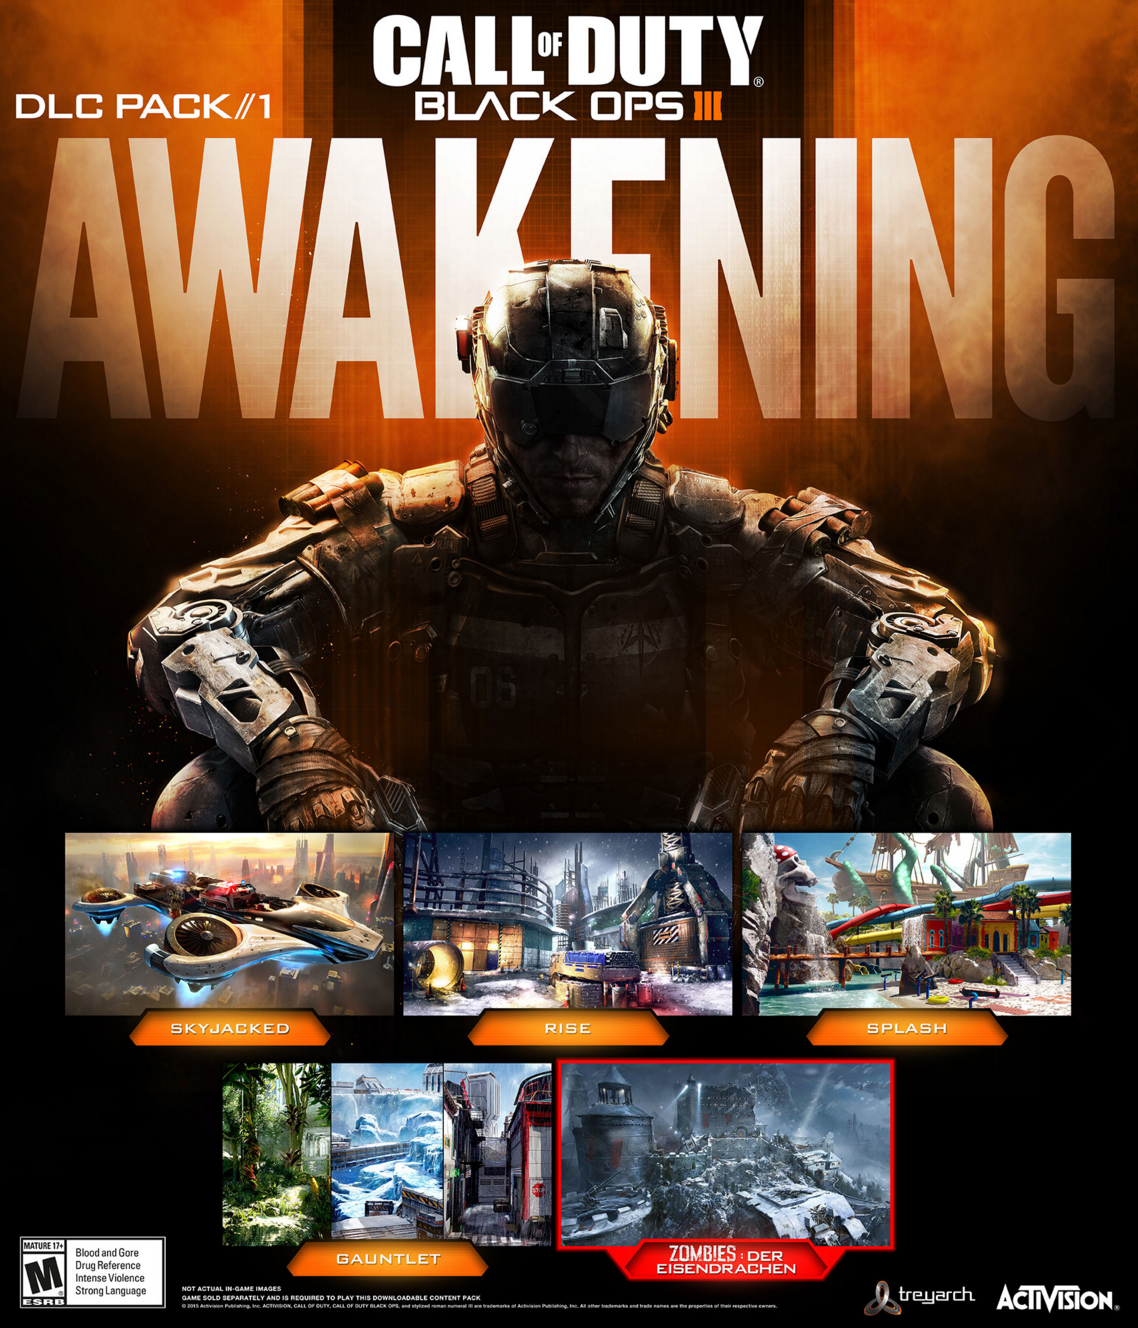 'Call of Duty Black Ops III: Awakening' DLC Pack